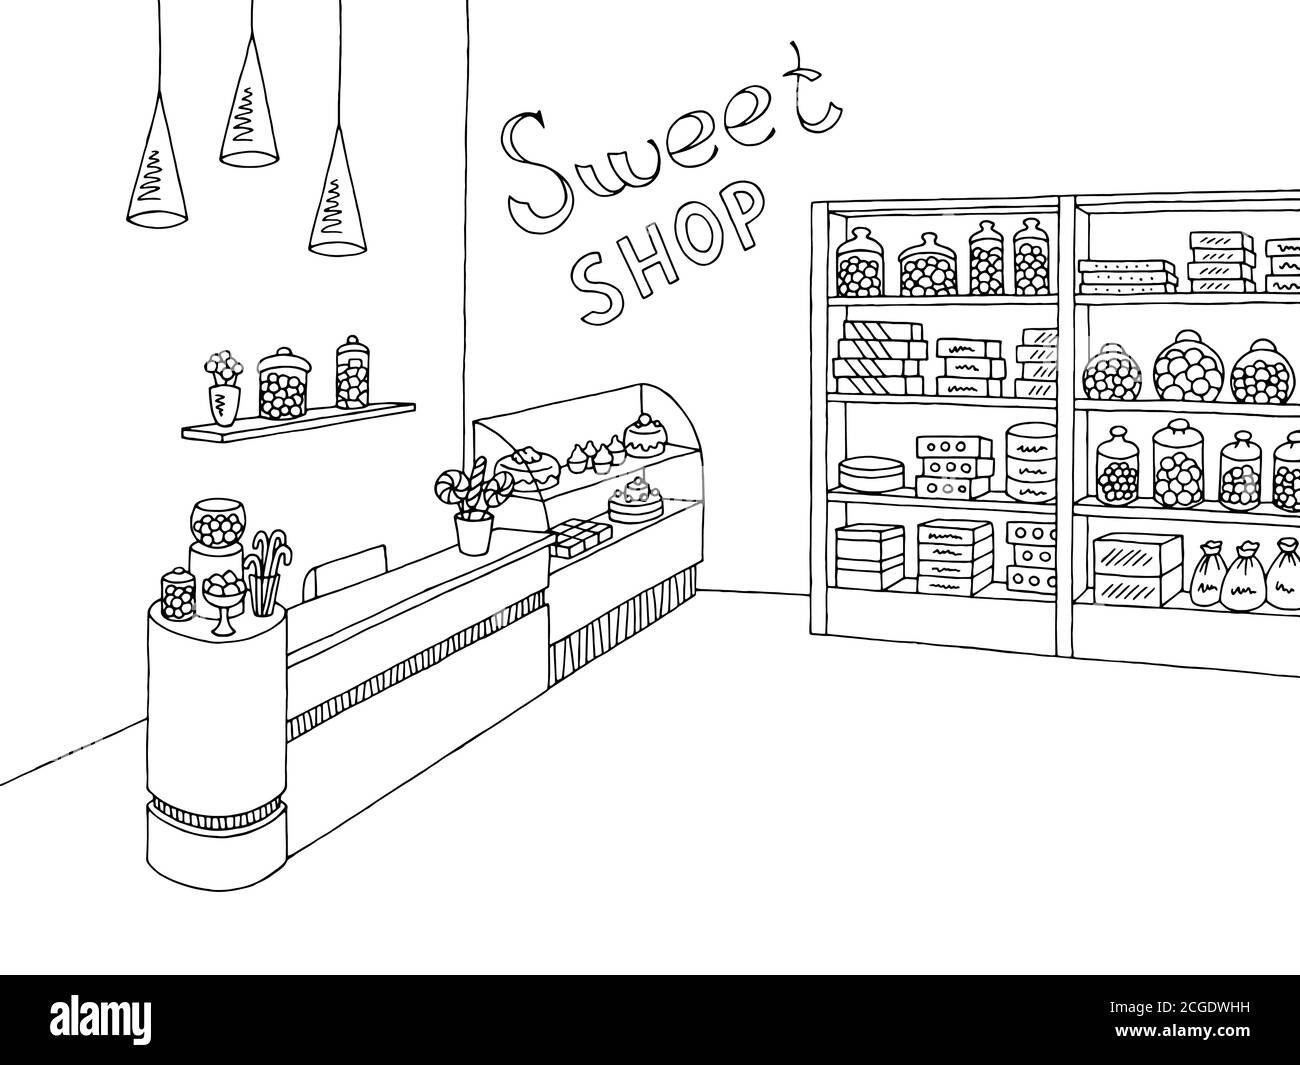 Sweet Shop Grafik schwarz weiß Interieur Skizze Illustration Vektor Stock Vektor